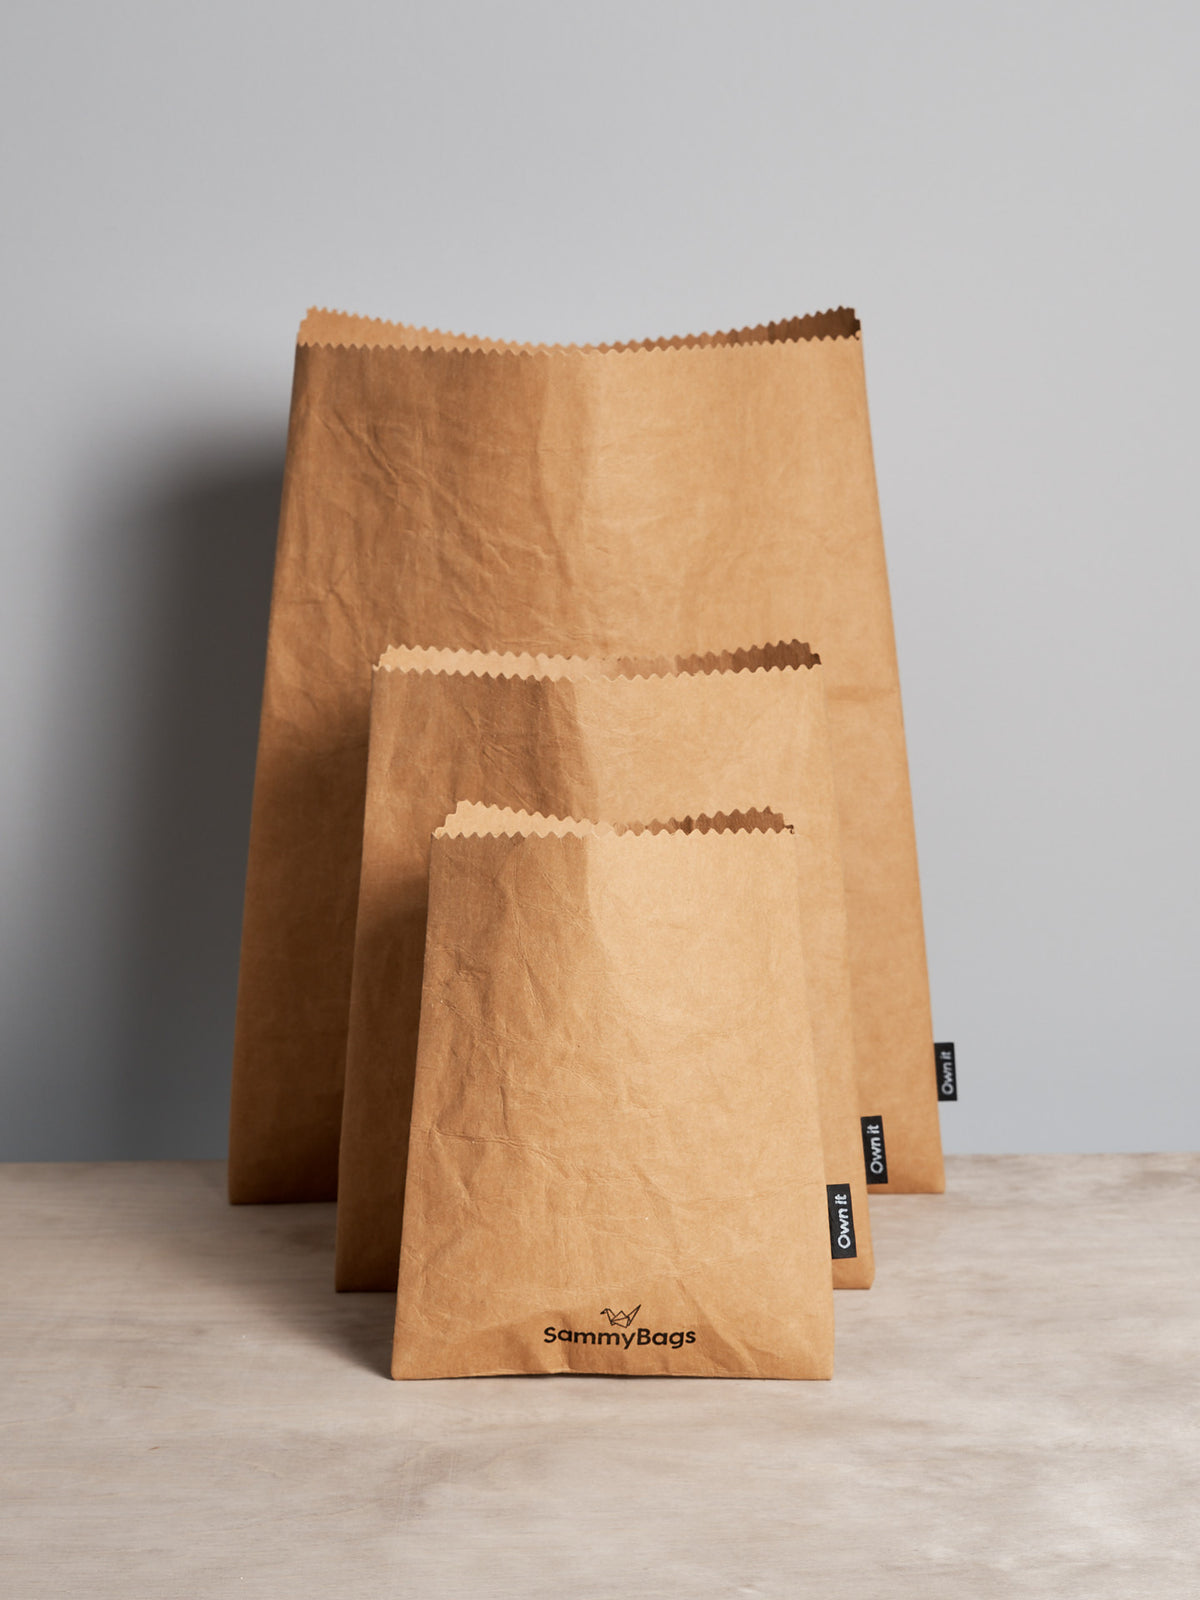 Three Sammy Bags Reusable Flat Bag – Small on a table.